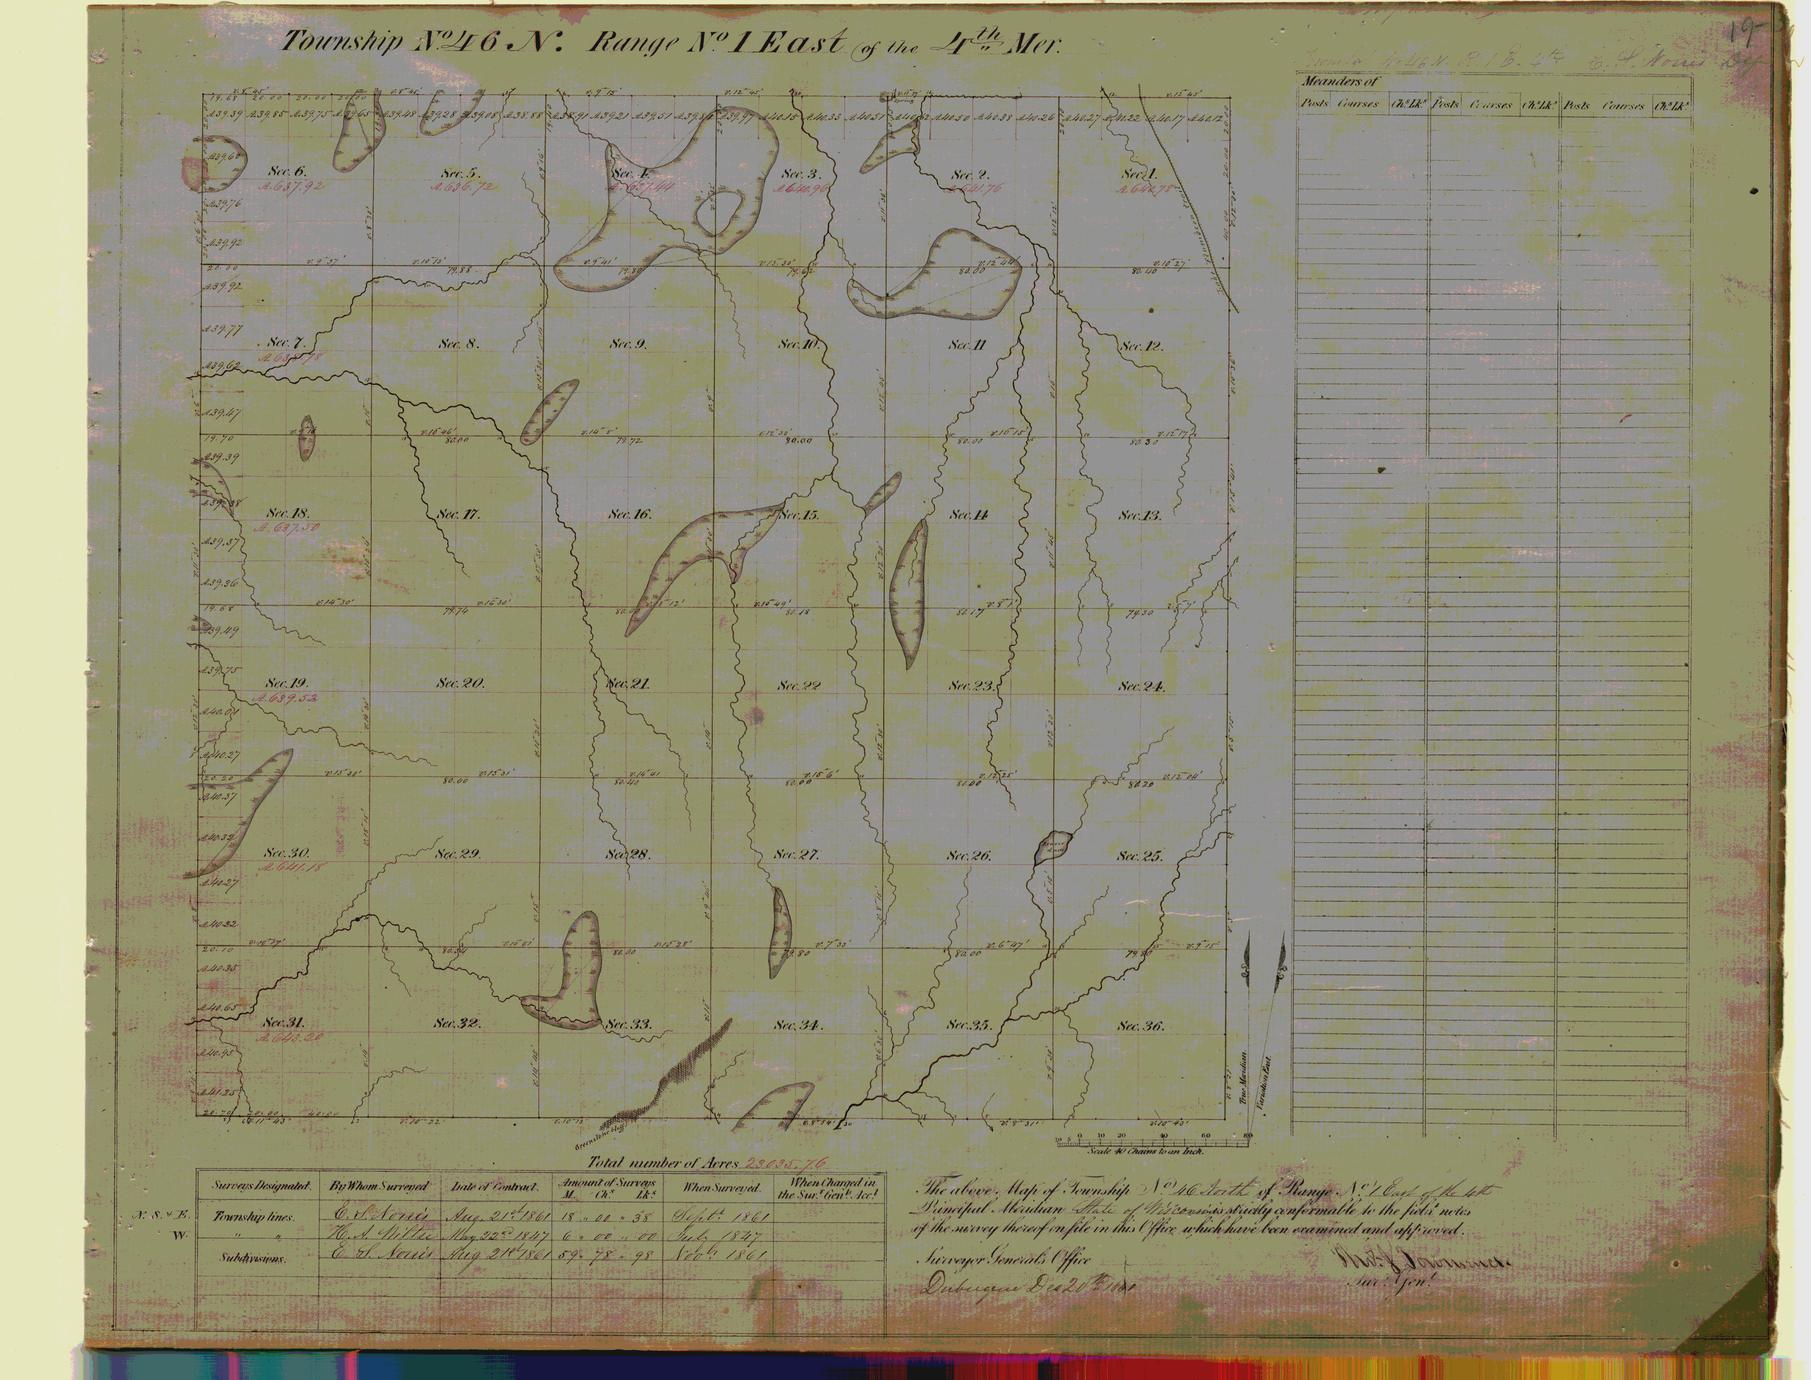 [Public Land Survey System map: Wisconsin Township 46 North, Range 01 East]